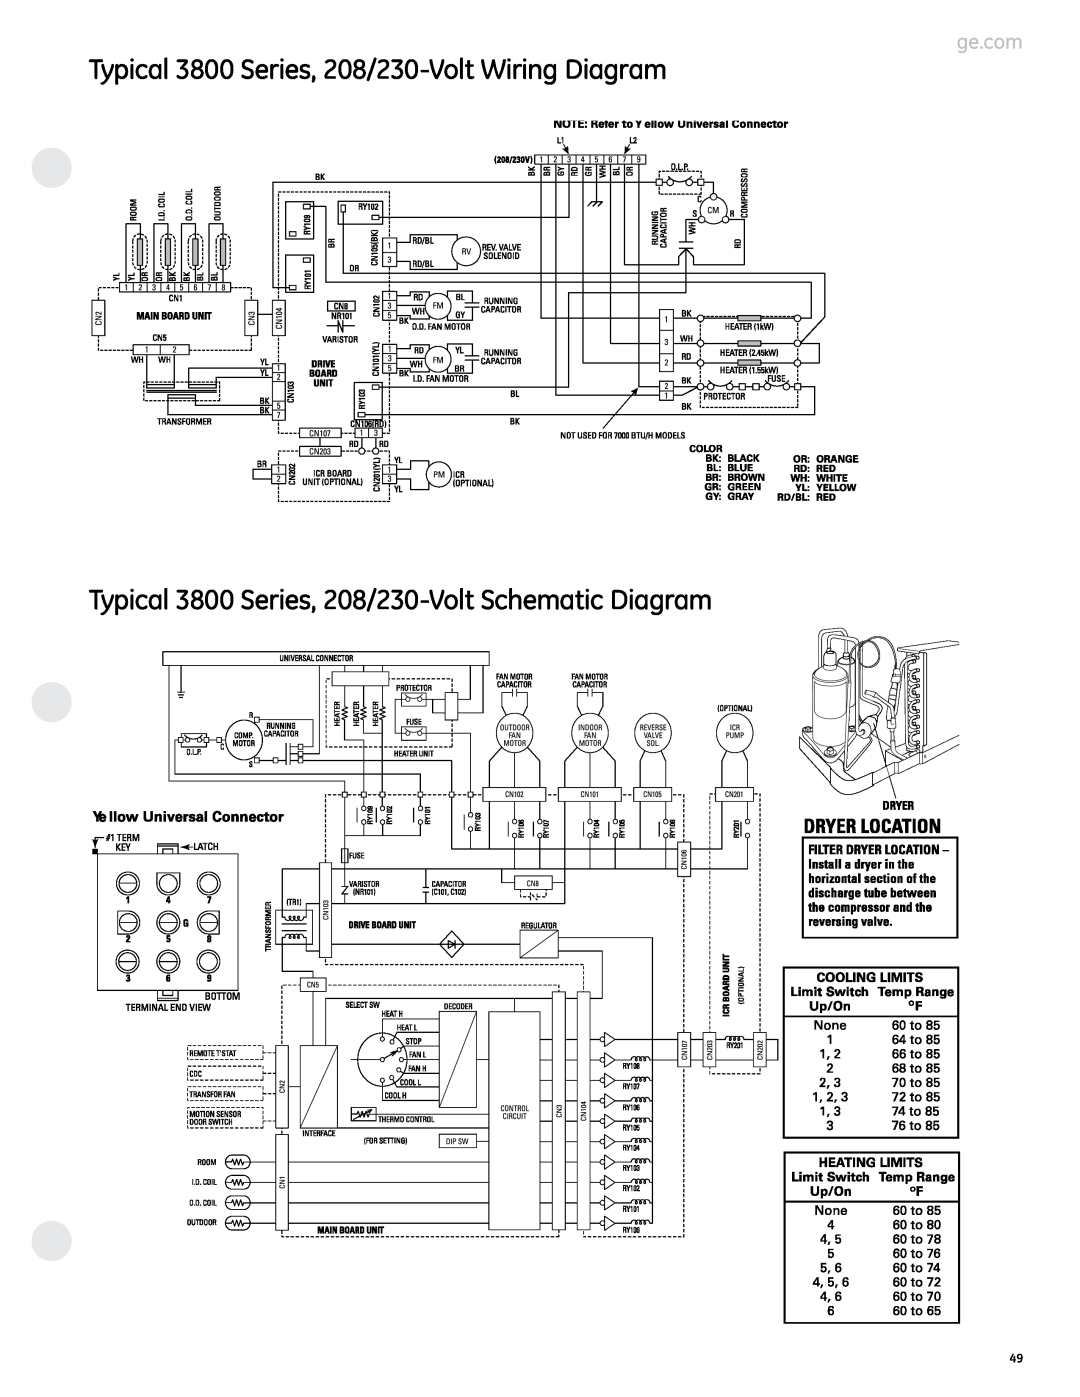 GE 2800 manual Typical 3800 Series, 208/230-VoltWiring Diagram 